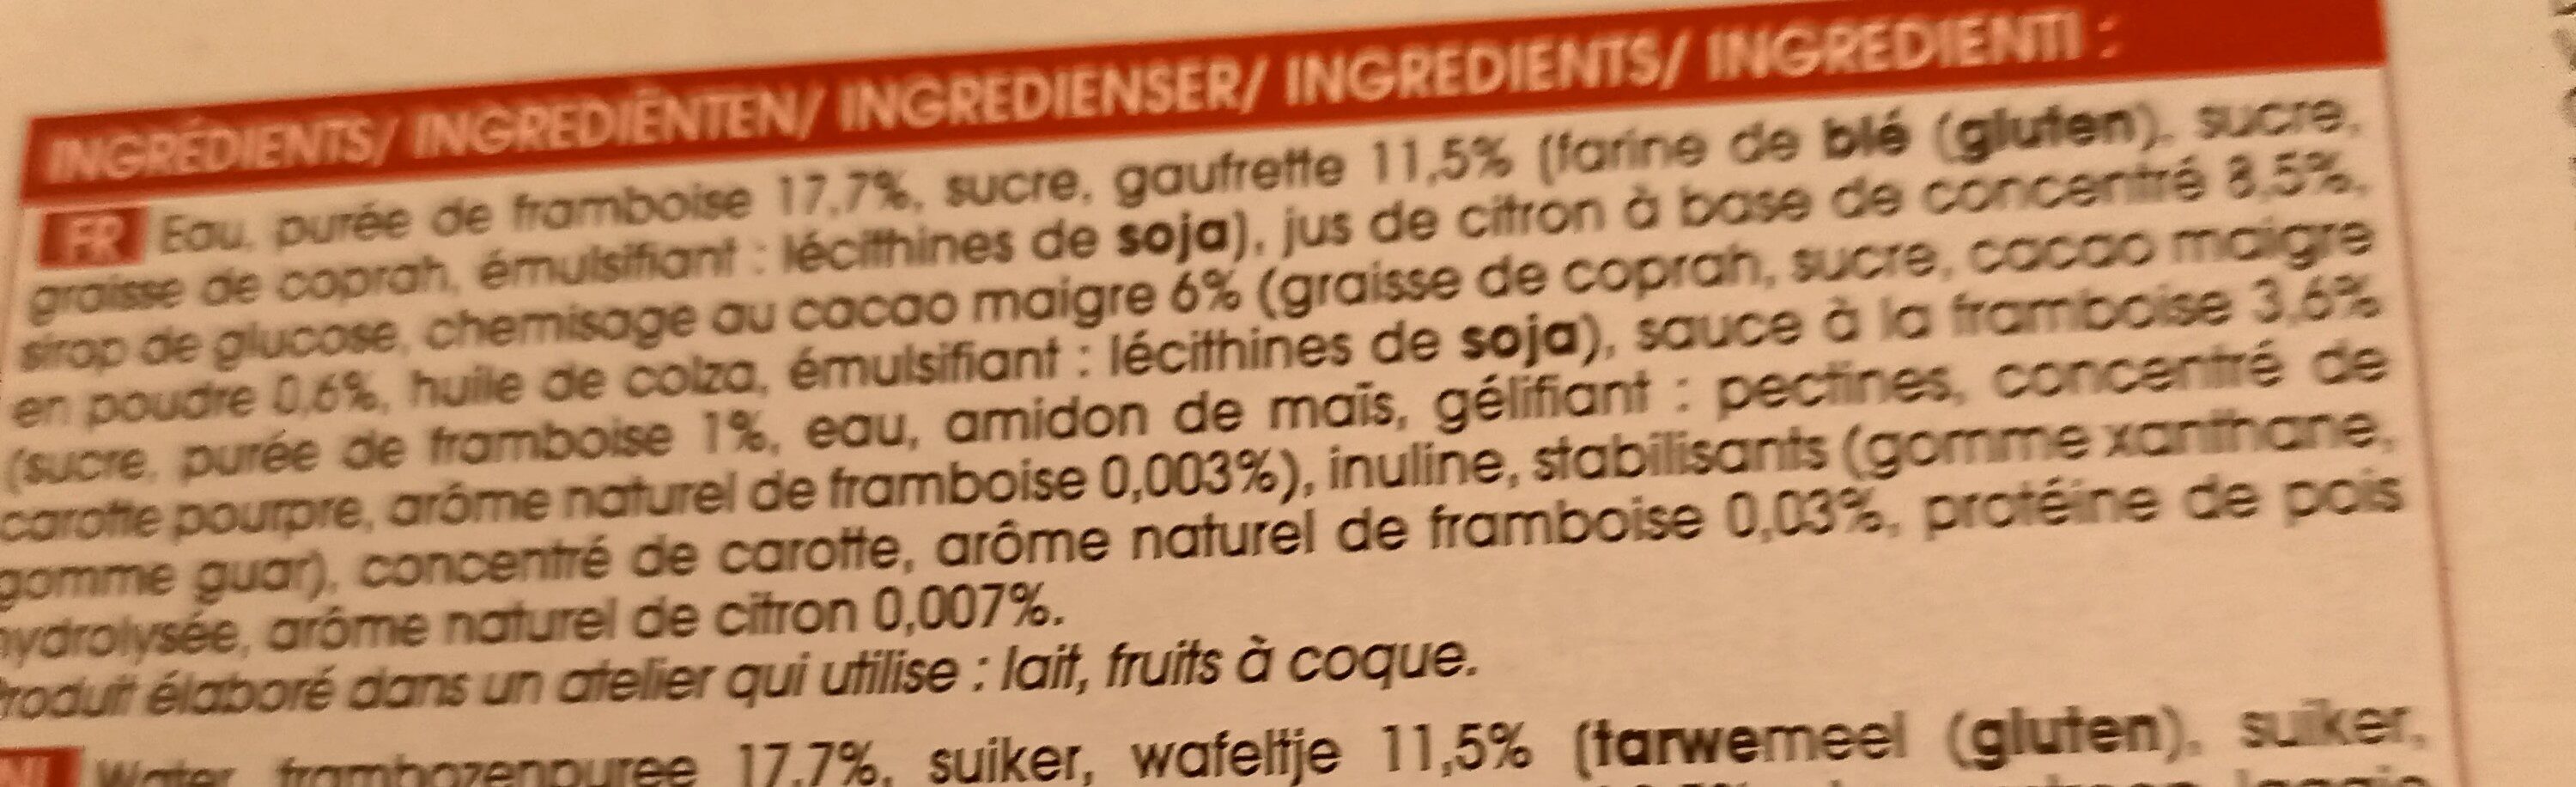 Citron framboise - Ingredients - fr